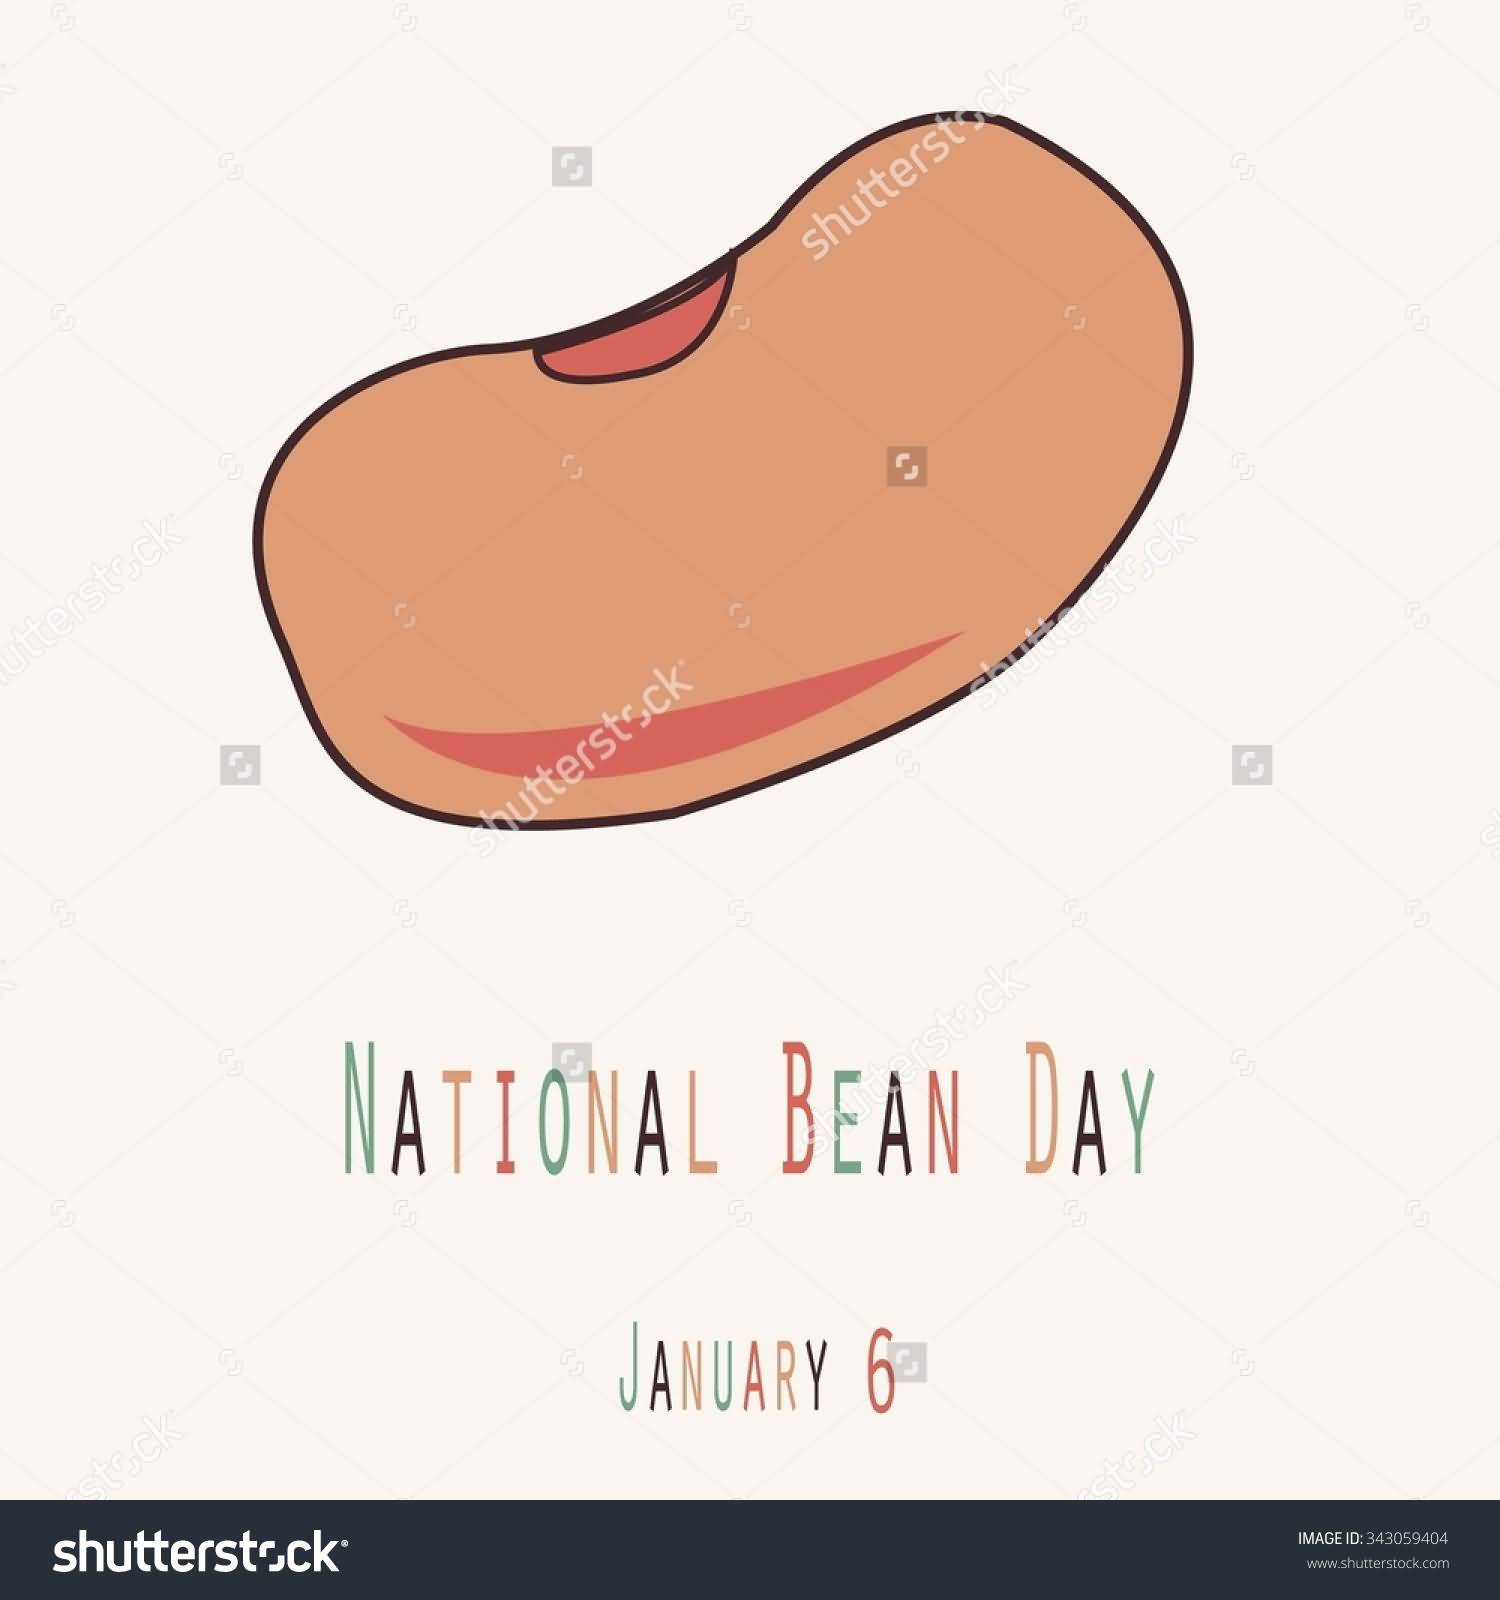 National Bean Day January 6 Illustration